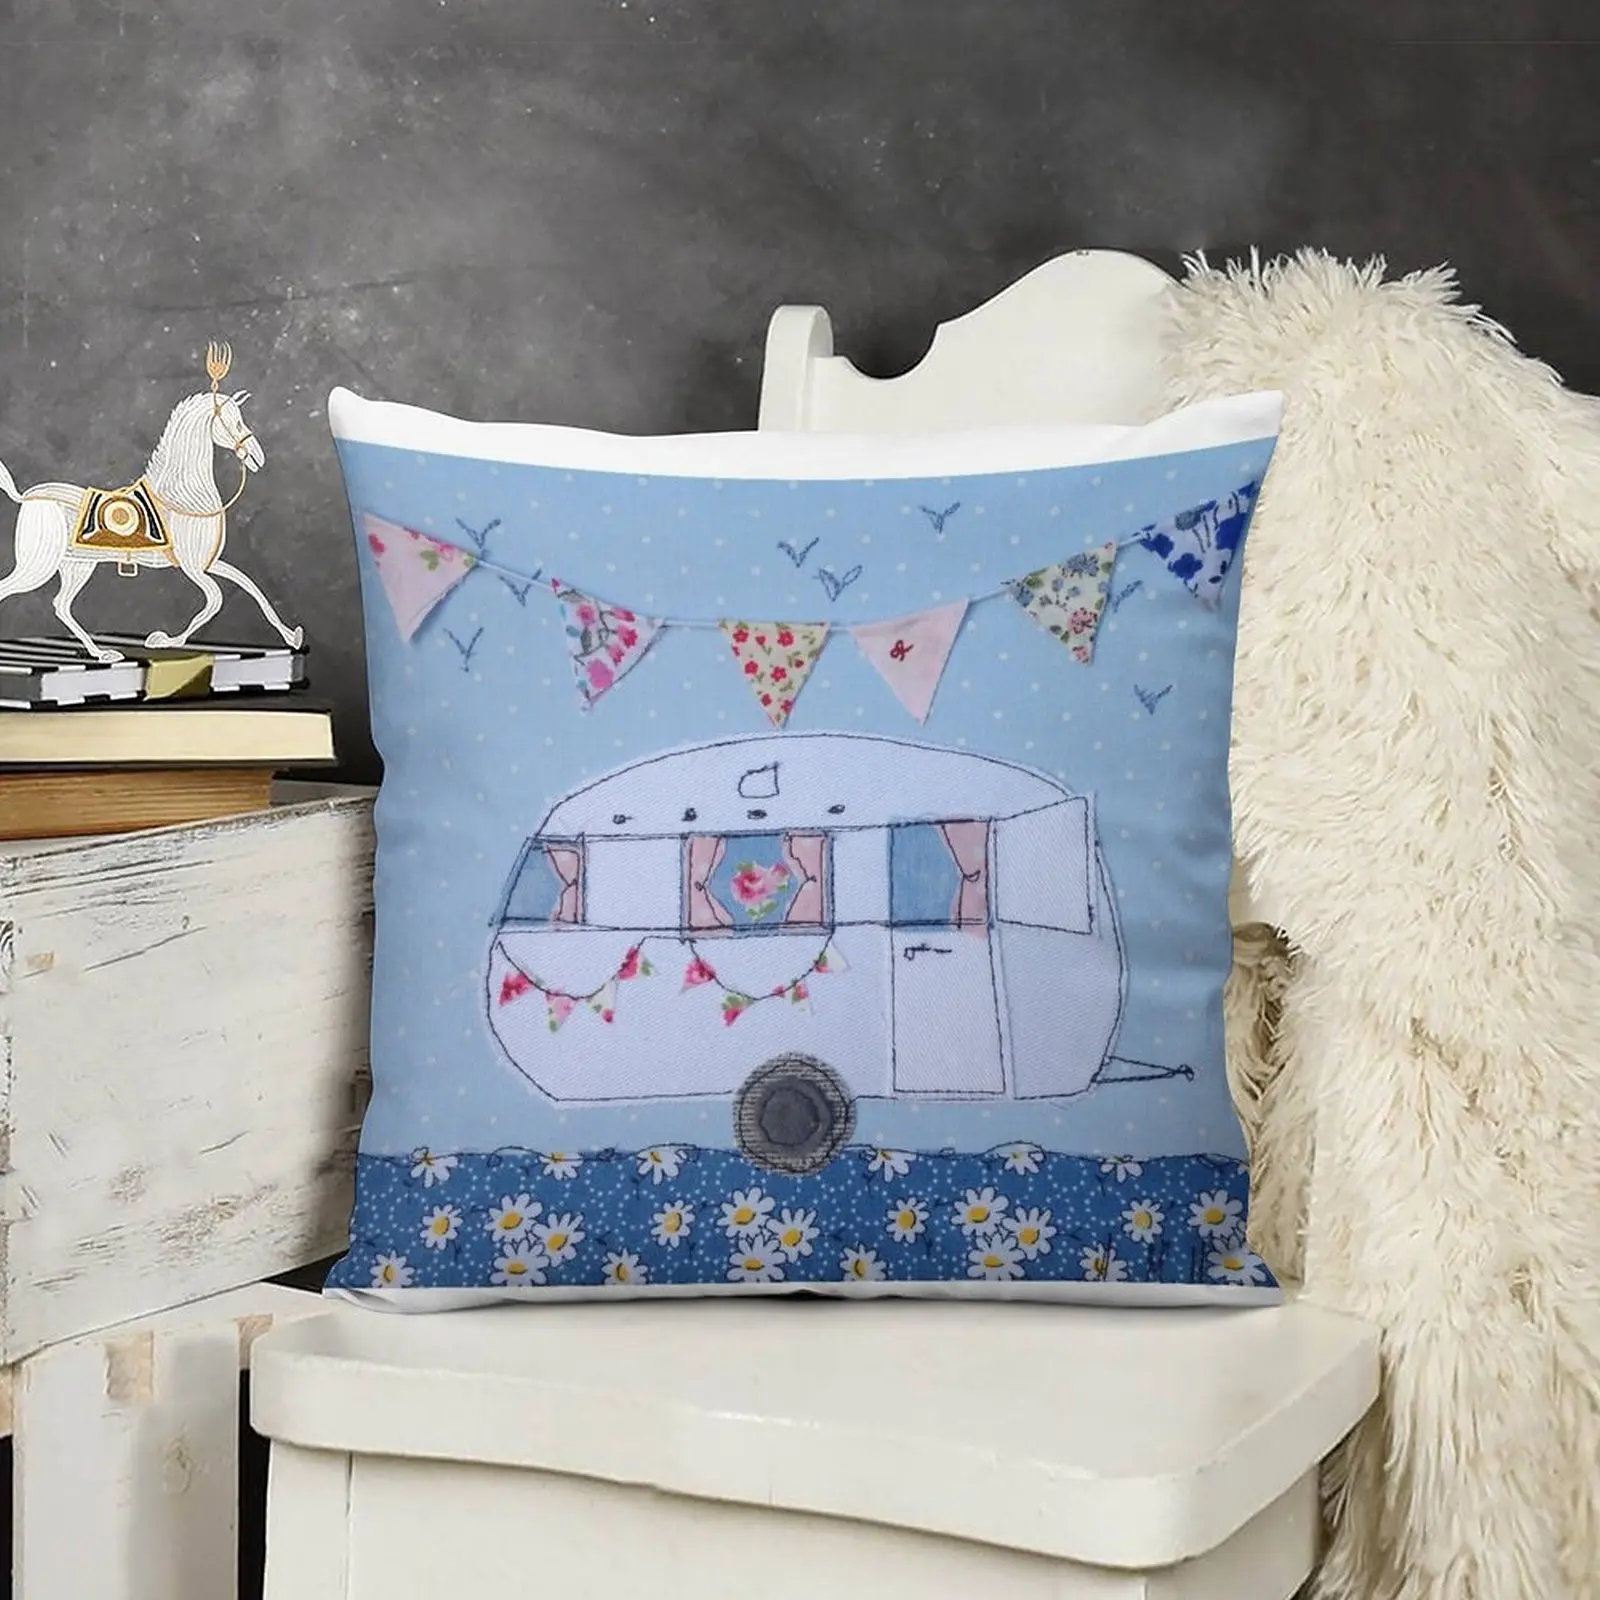 Ретро Белая подушка-караван, чехлы для диванов, Наволочки для подушек, Изготовленная на заказ подушка, Фото Декоративная диванная подушка